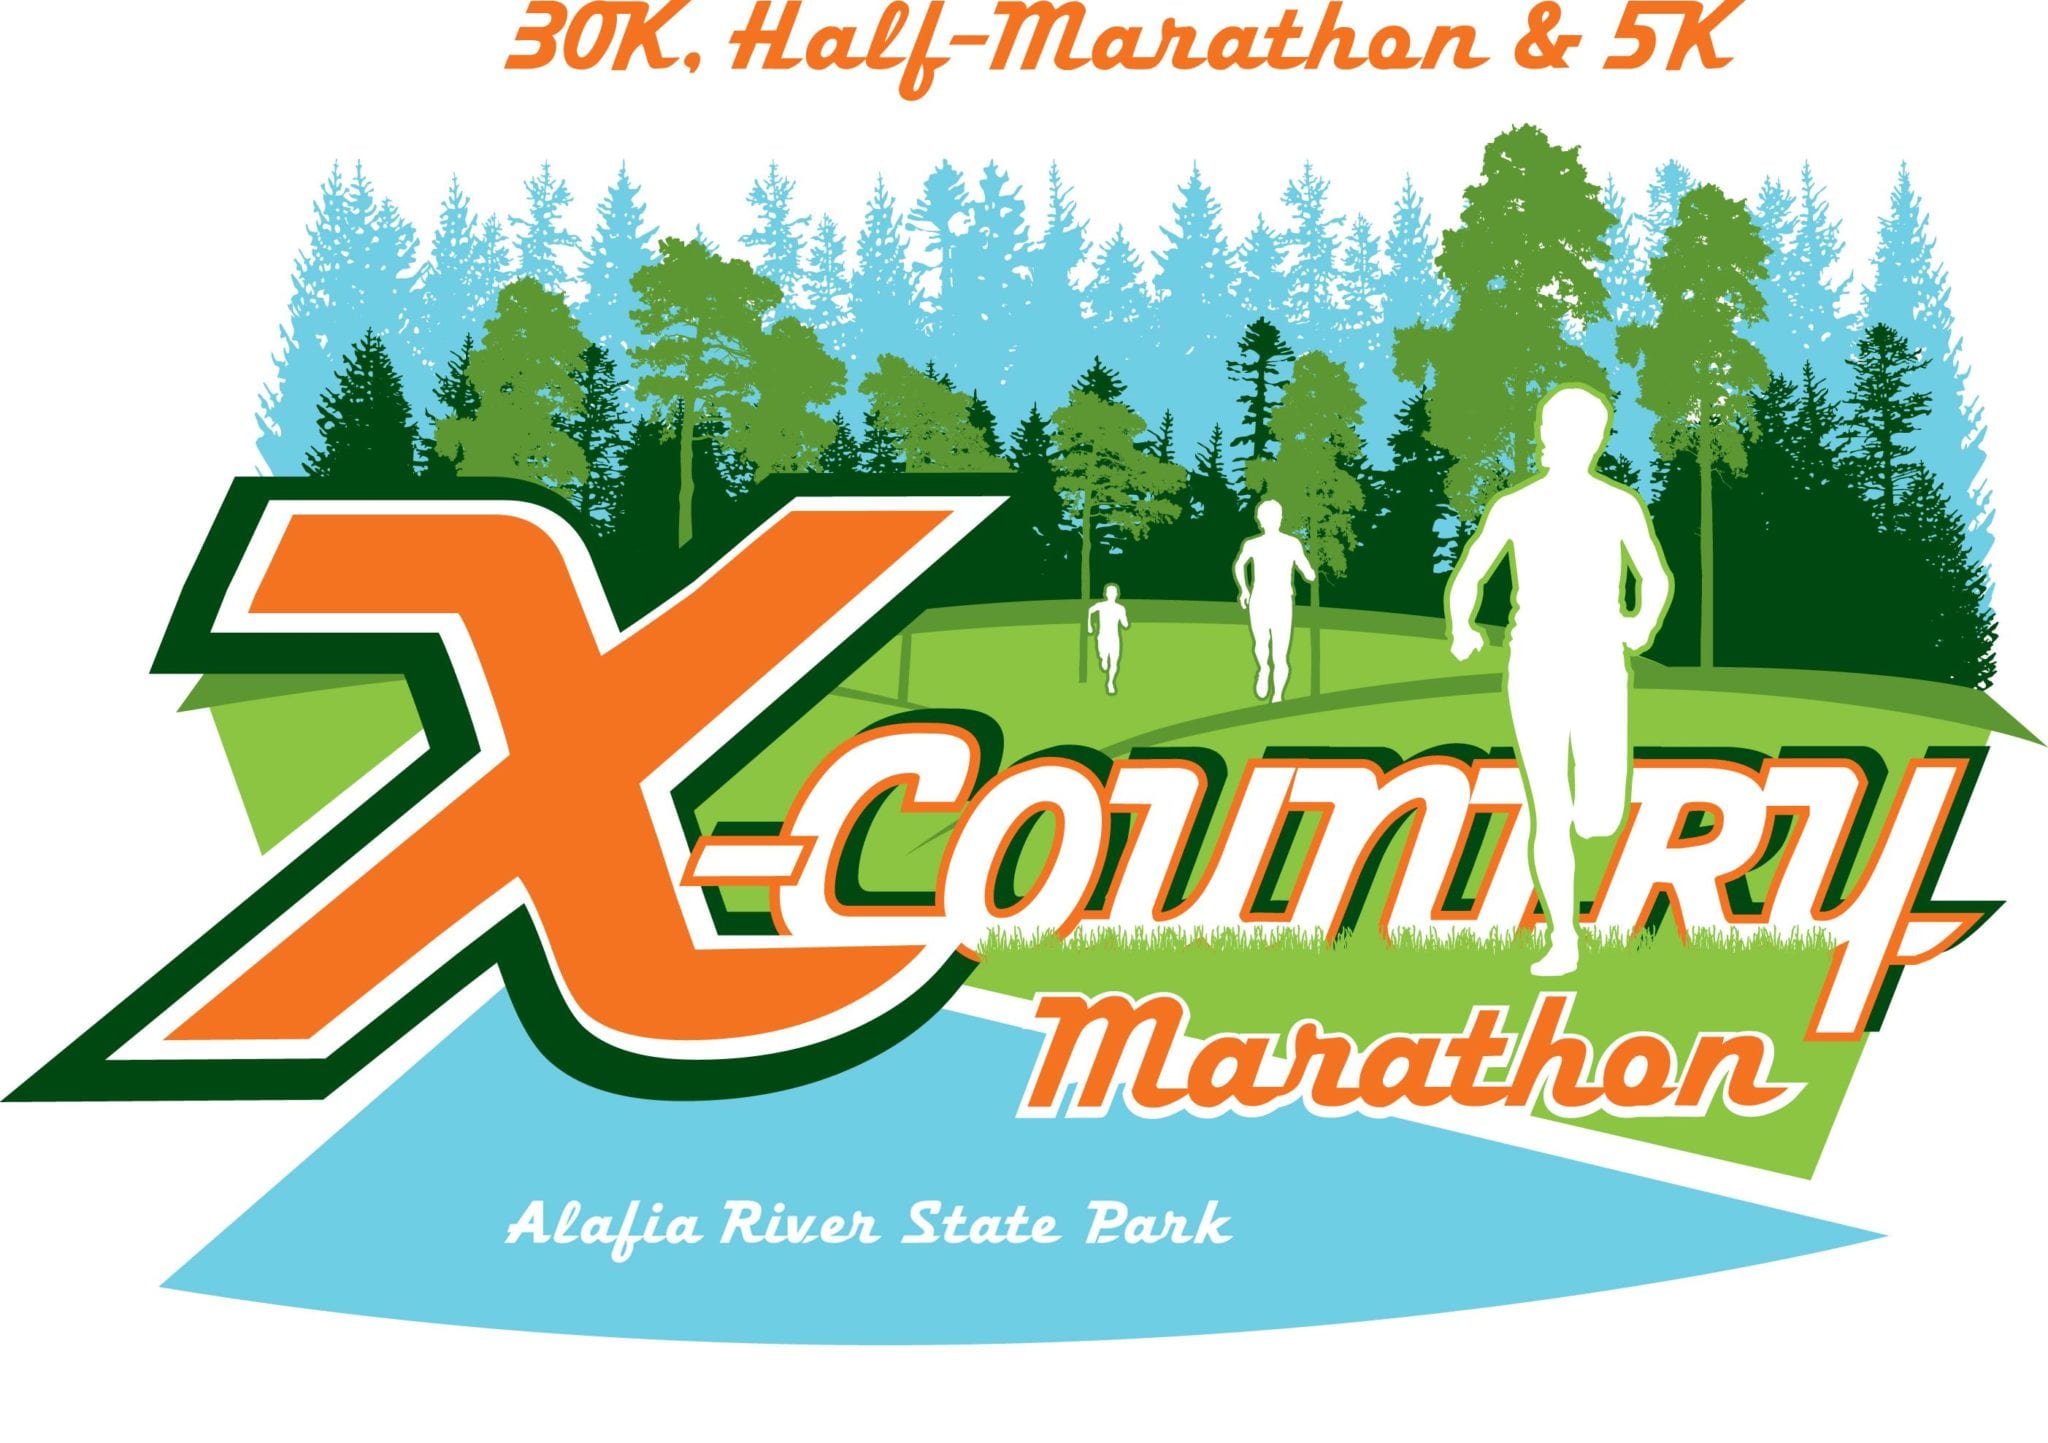 Tampa Races X-Country Marathon logo on RaceRaves